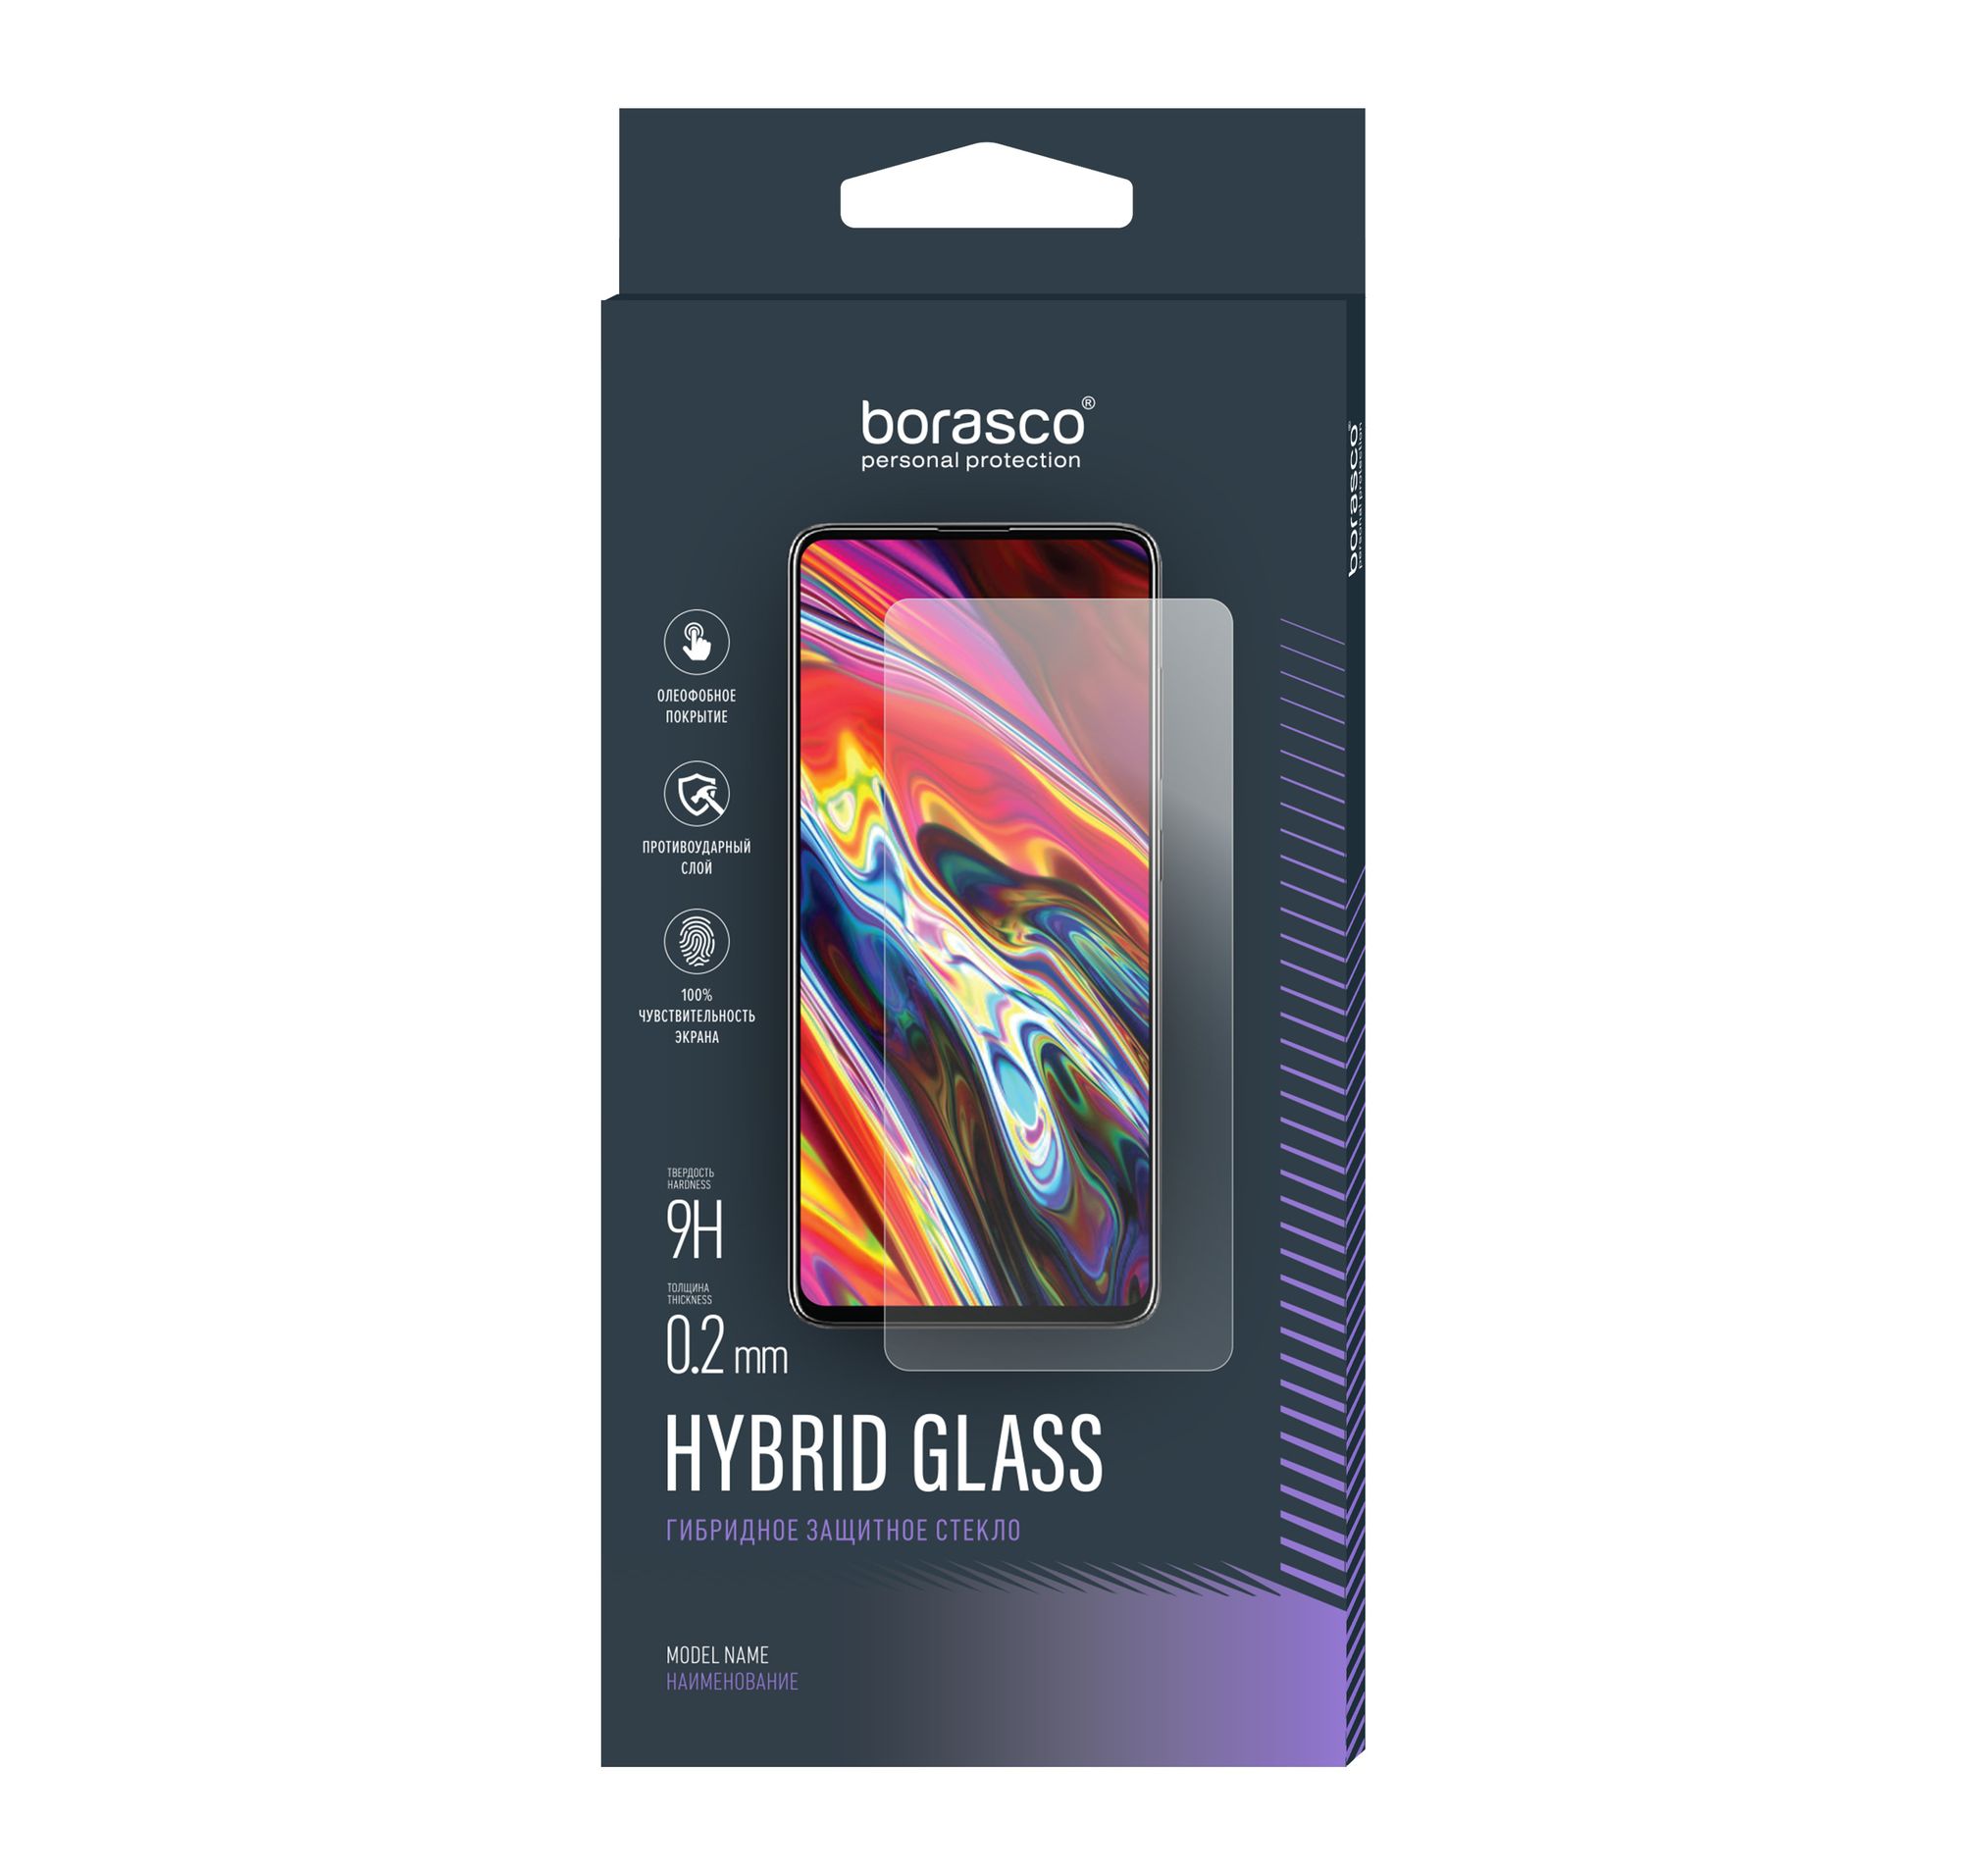 Стекло защитное Hybrid Glass VSP 0,26 мм для Sony Xperia XZ Premium Dual коннектор сим карты sim для sony e6683 xperia z5 dual e6883 xperia z5 premium dual